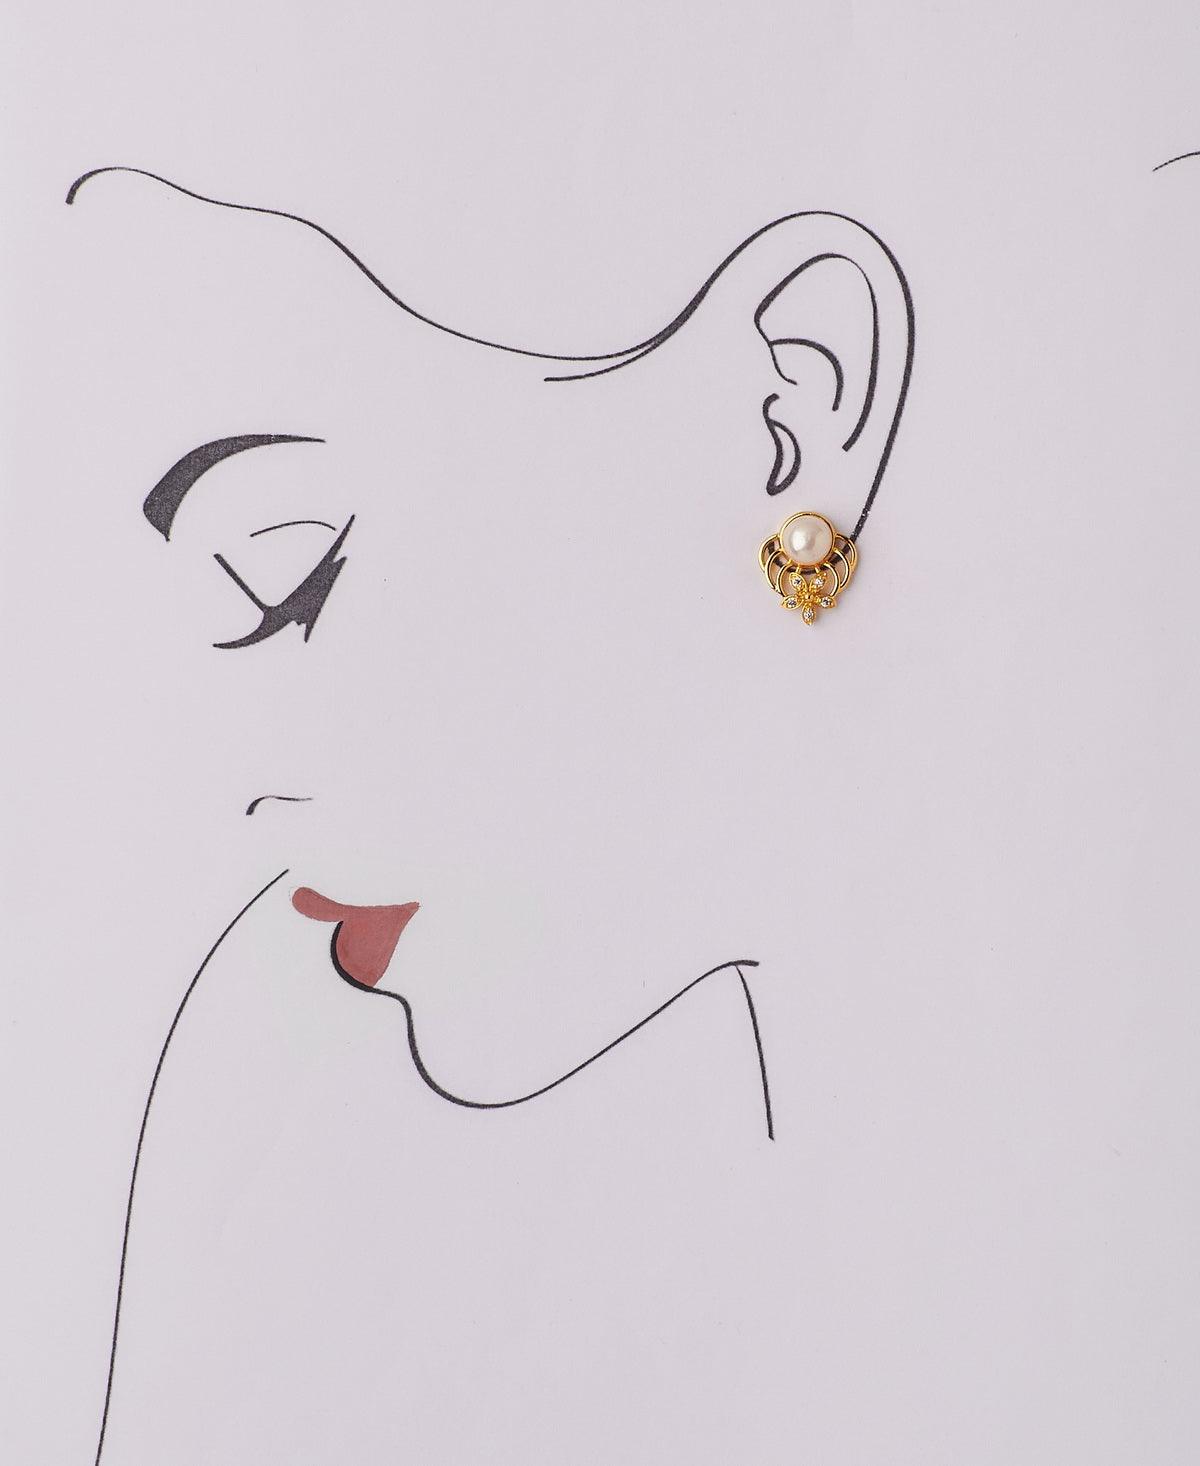 Floral Stud Pearl Earring - Chandrani Pearls